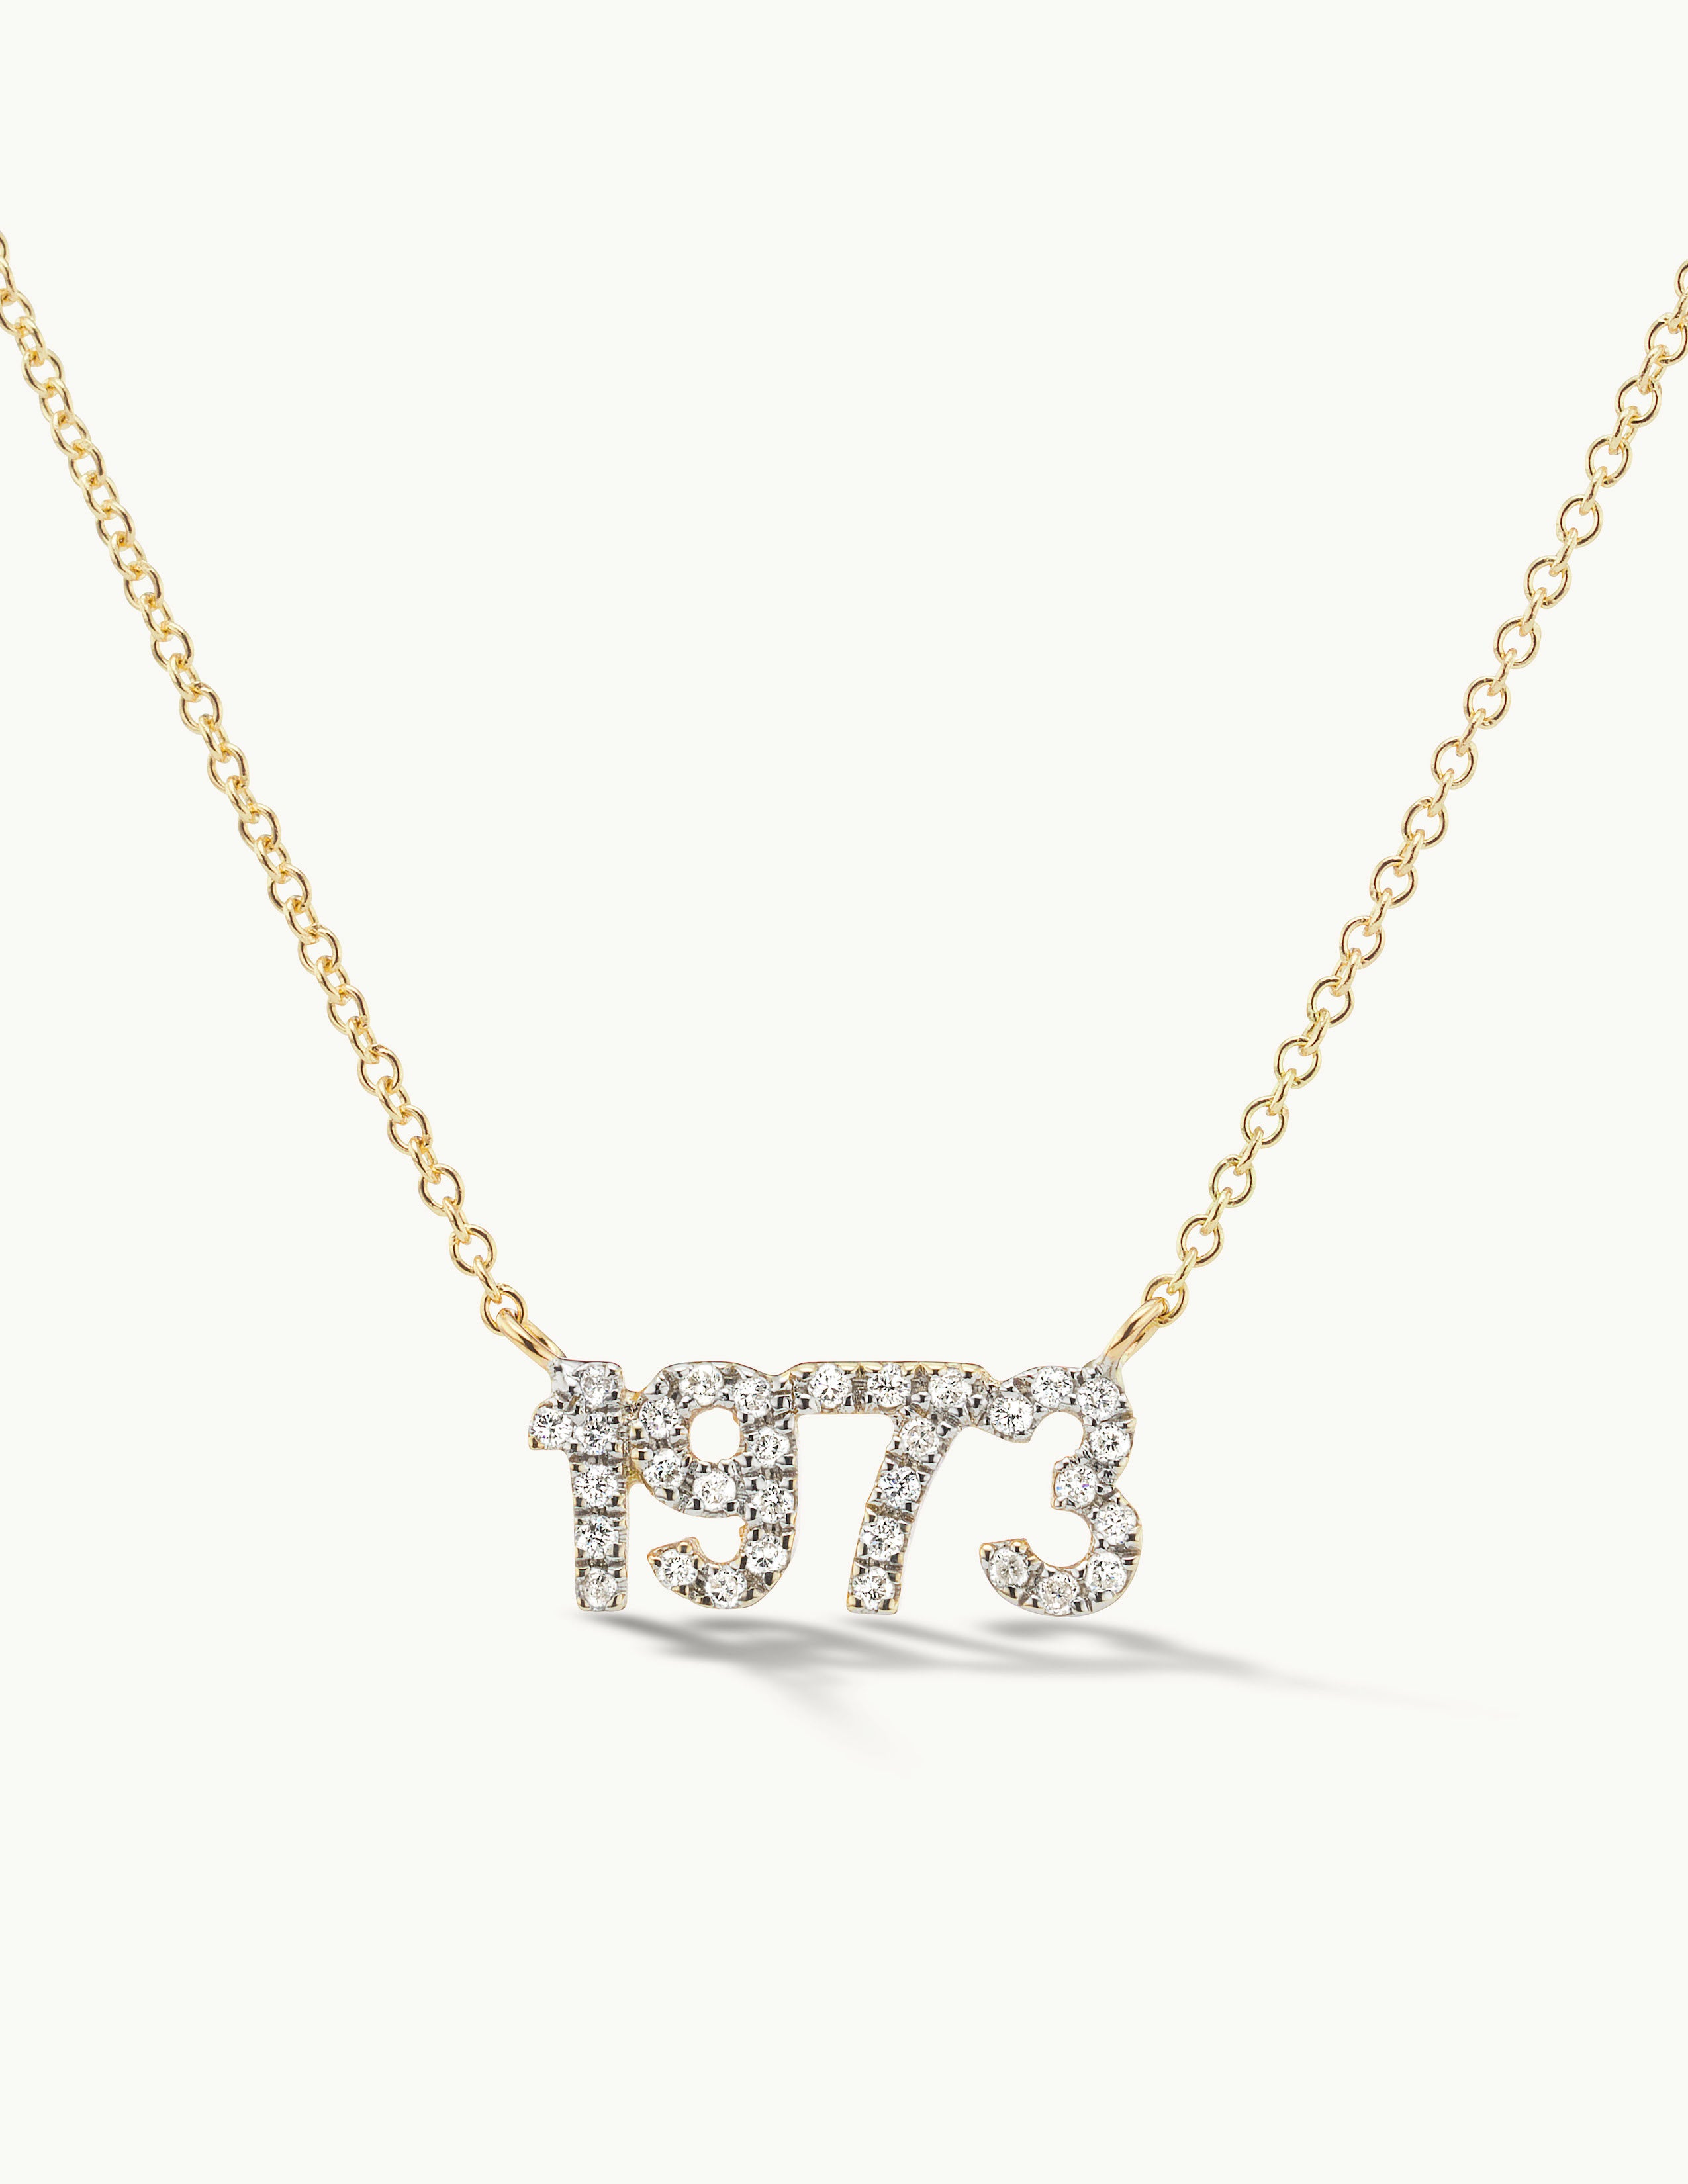 1973 Diamond Necklace